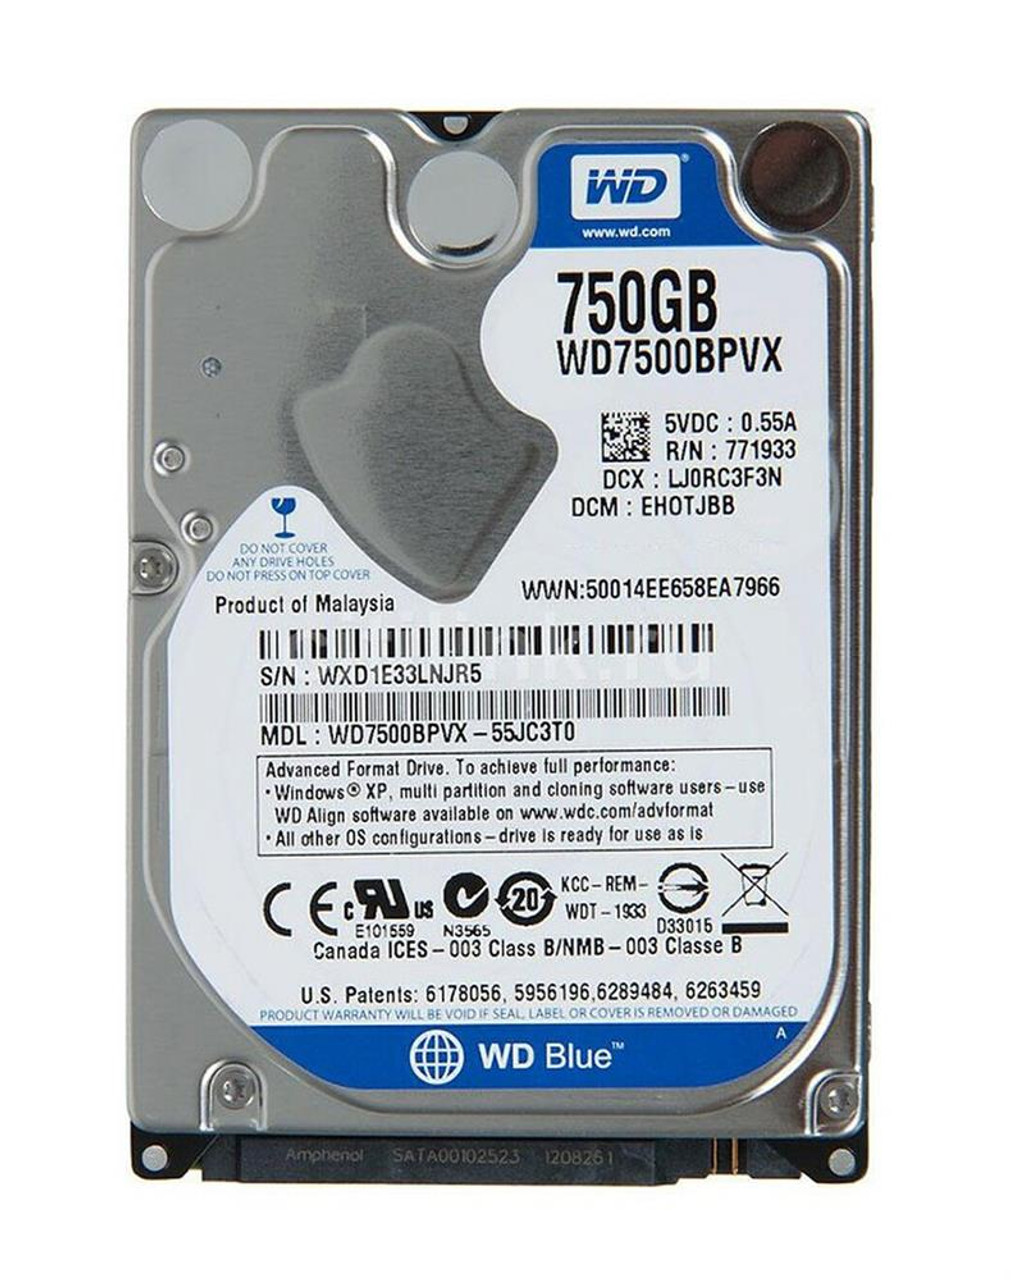 lana célula Cooperación WD7500BPVX-55JC3T0 Western Digital Blue 750GB 5400RPM SATA 6Gbps 8MB Cache  2.5-inch Internal Hard Drive